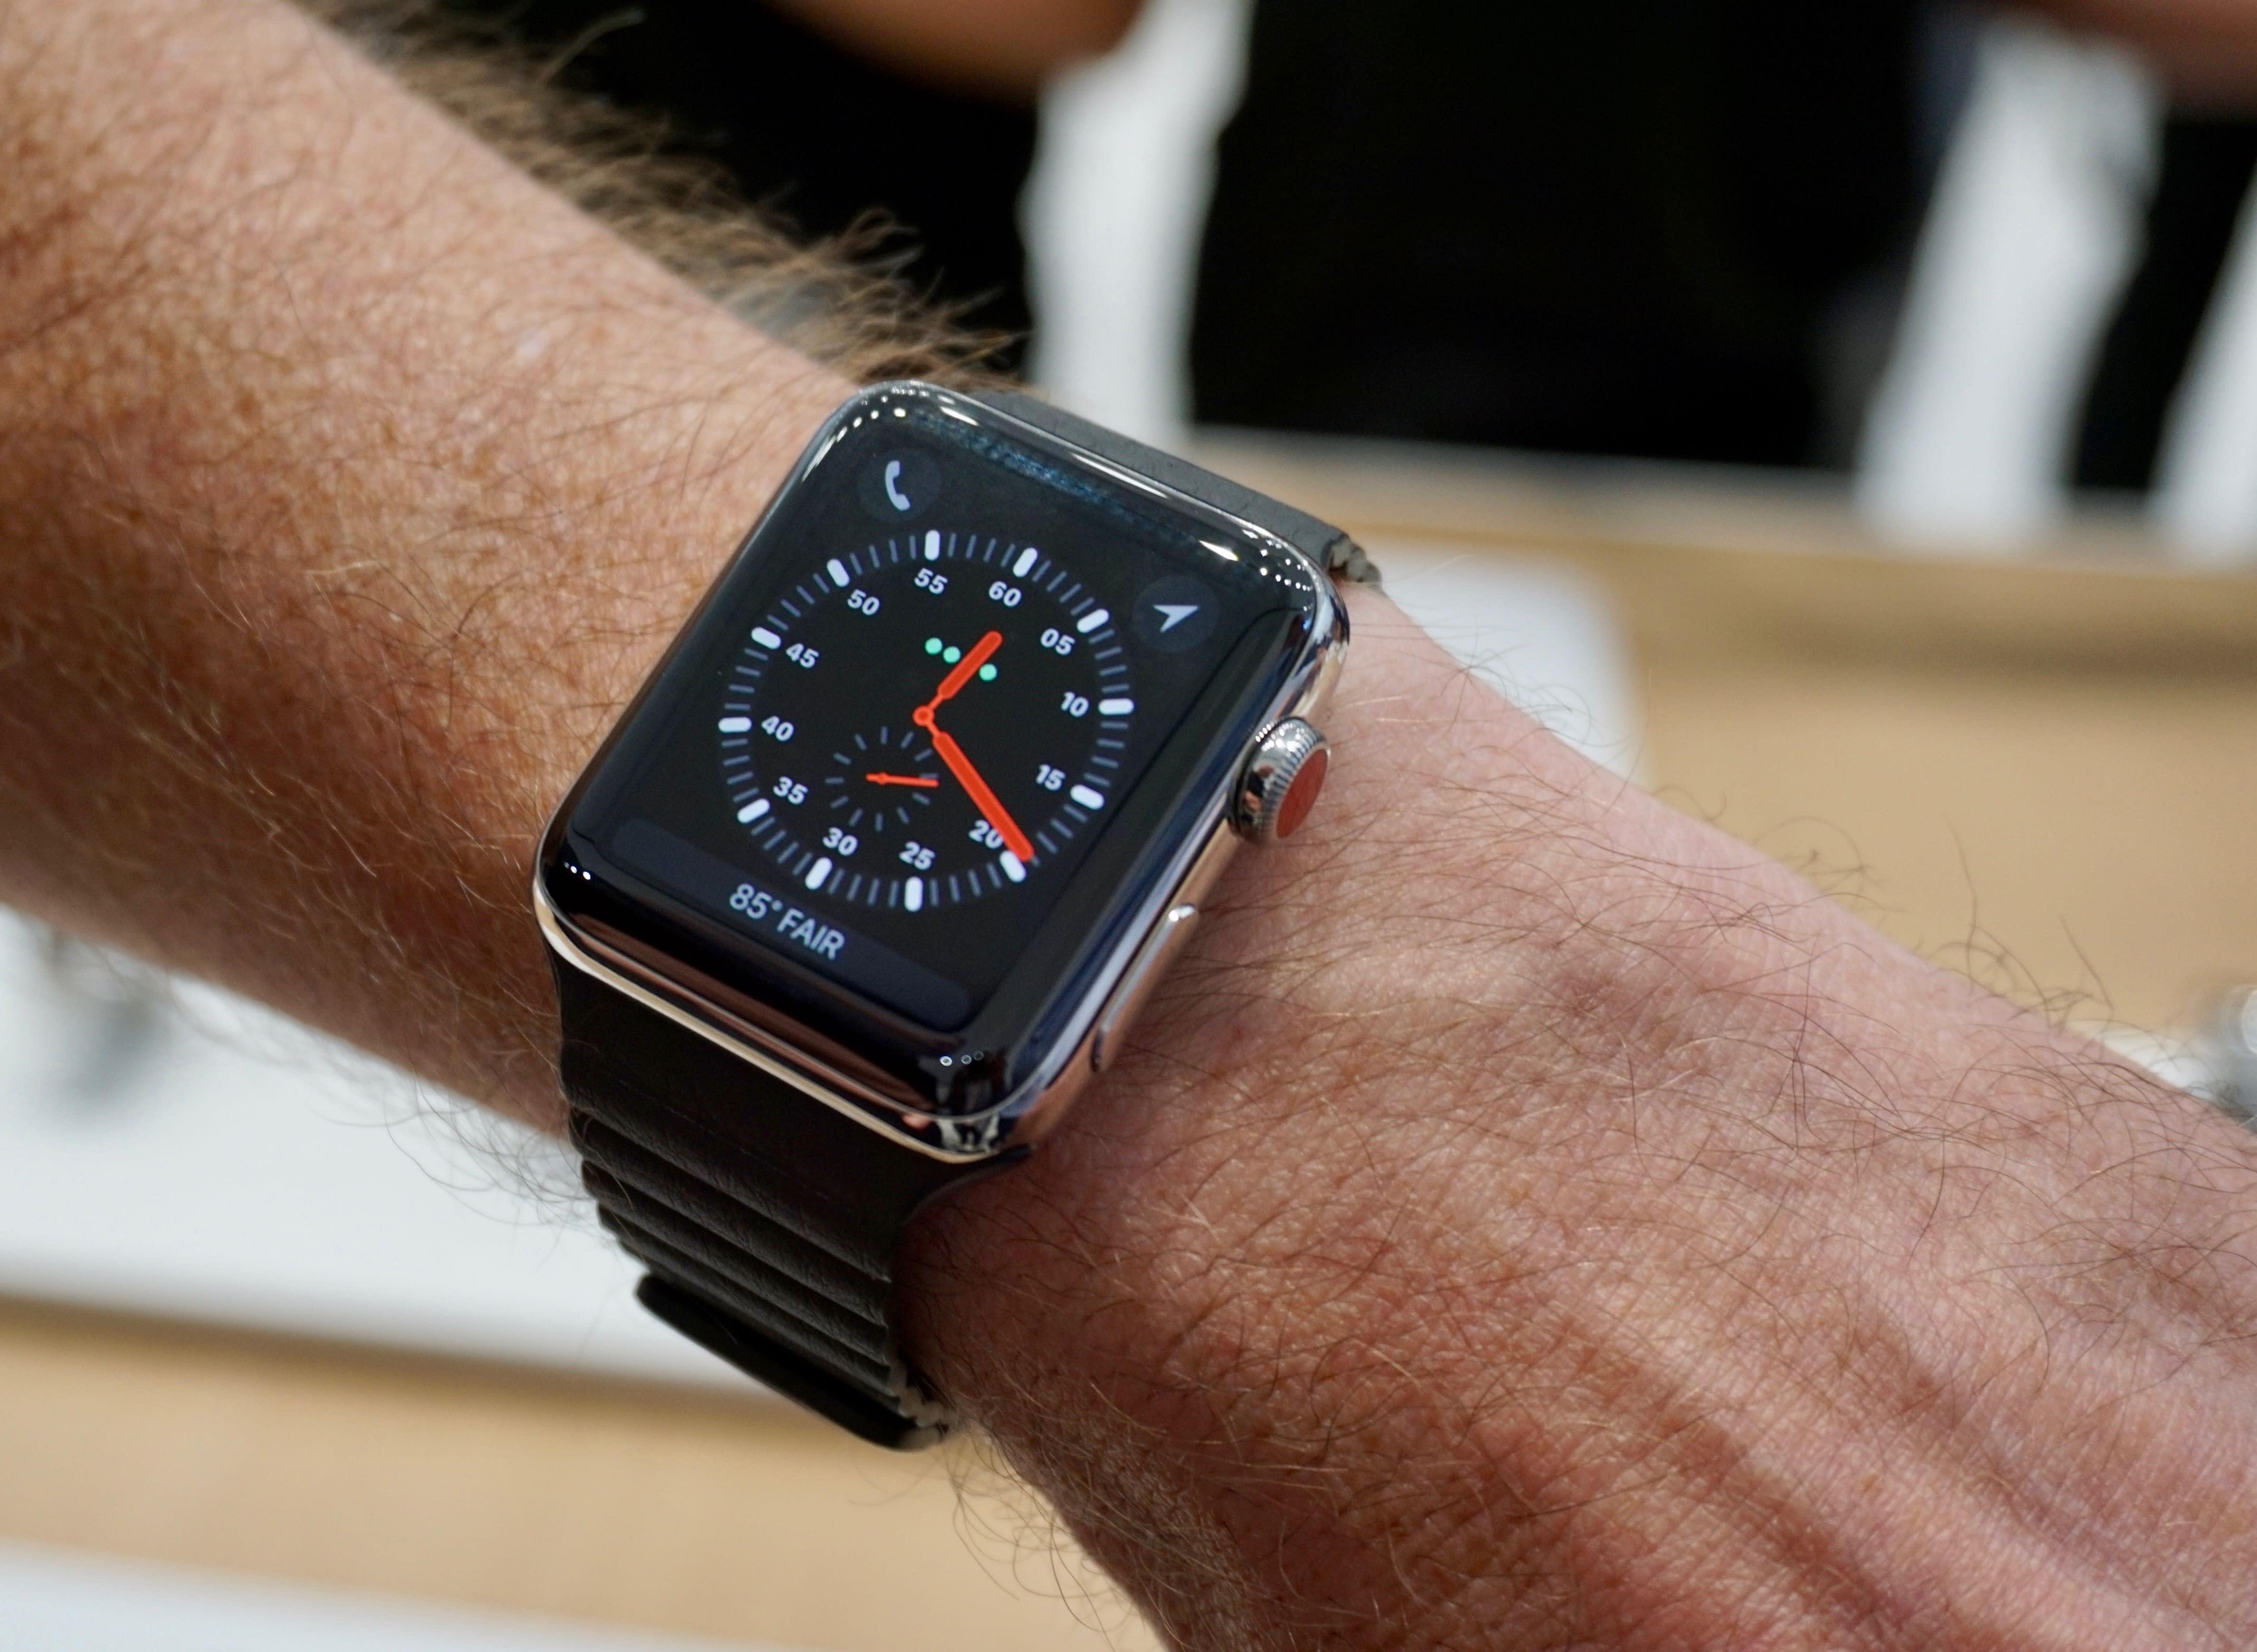 Apple Watch Series 3 hands-on